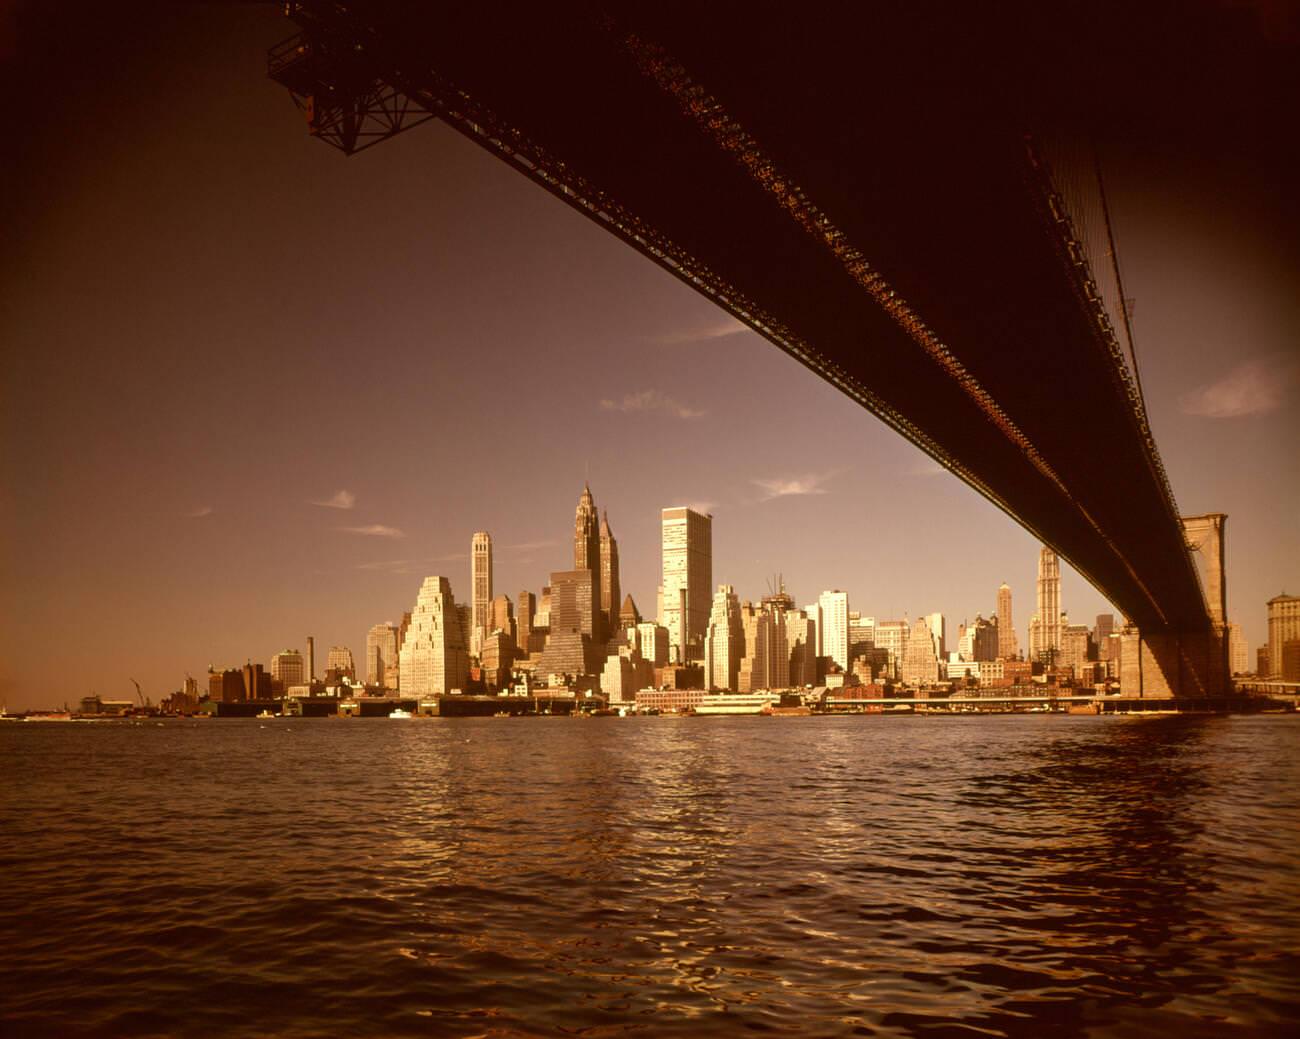 Construction Crane Of The World Trade Center Visible Under The Brooklyn Bridge, 1960S.